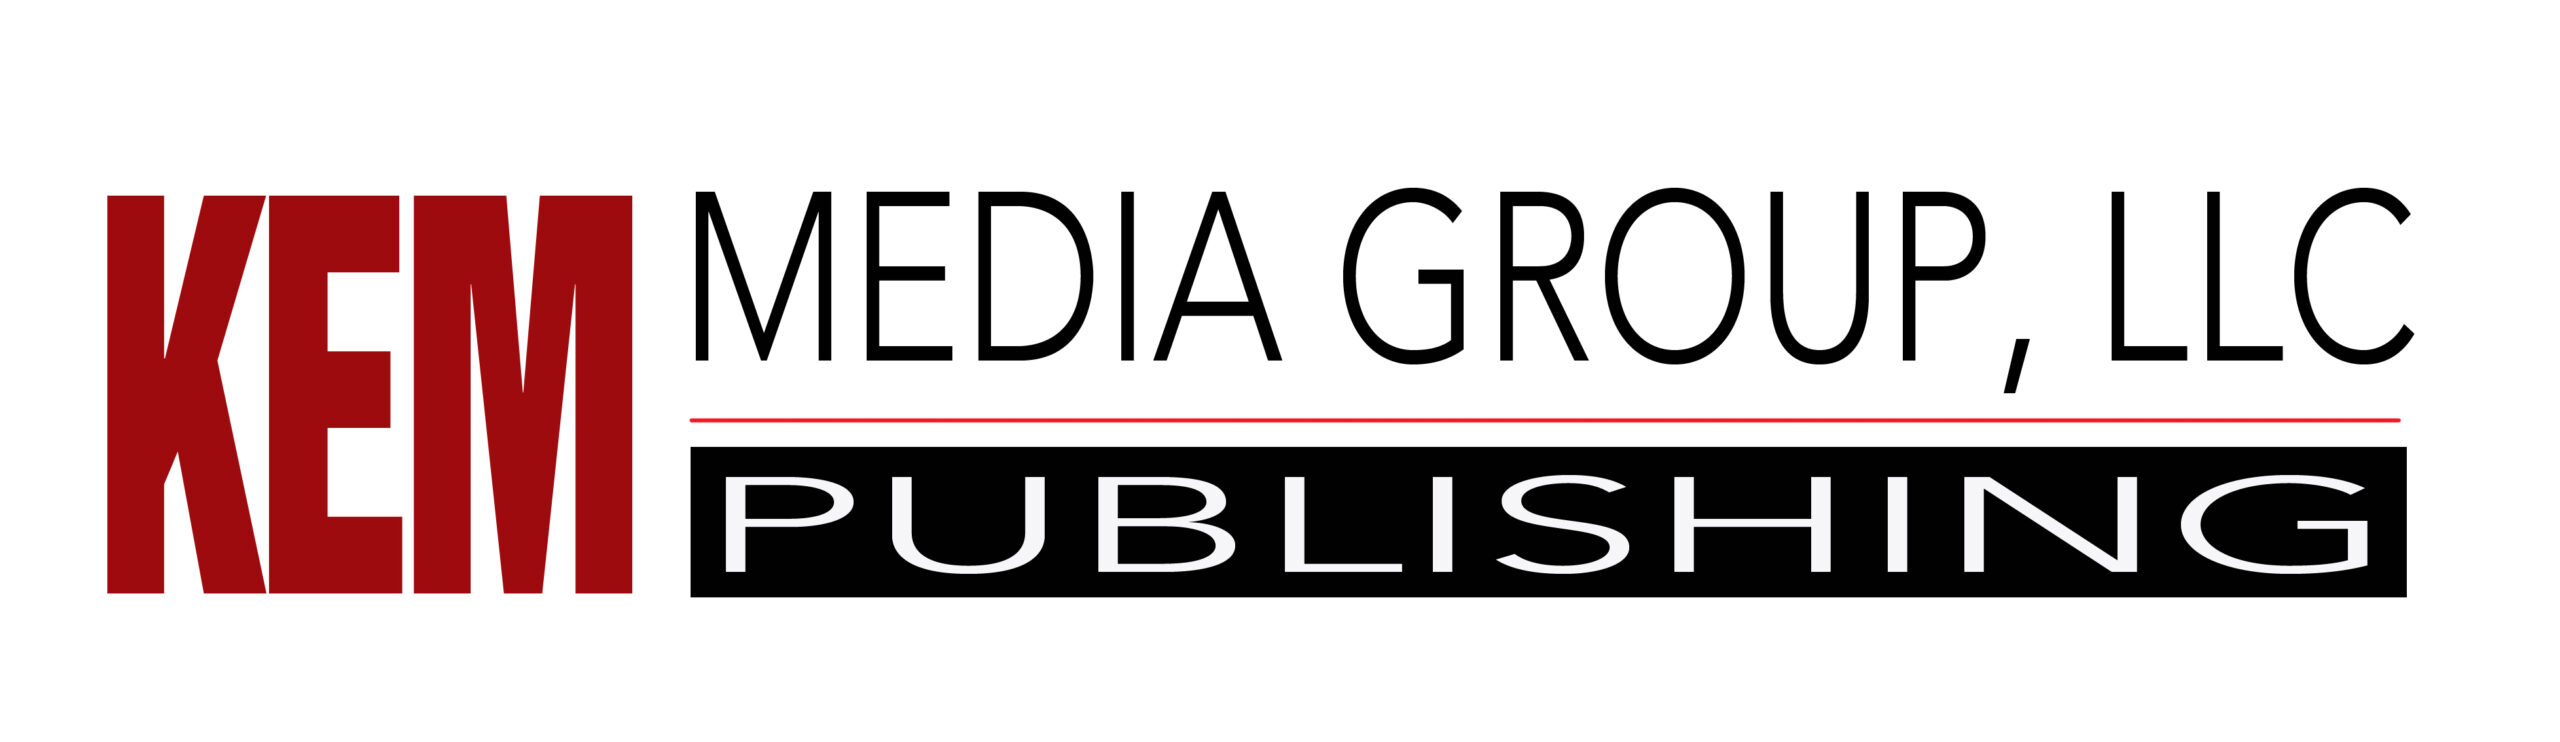 kem media group